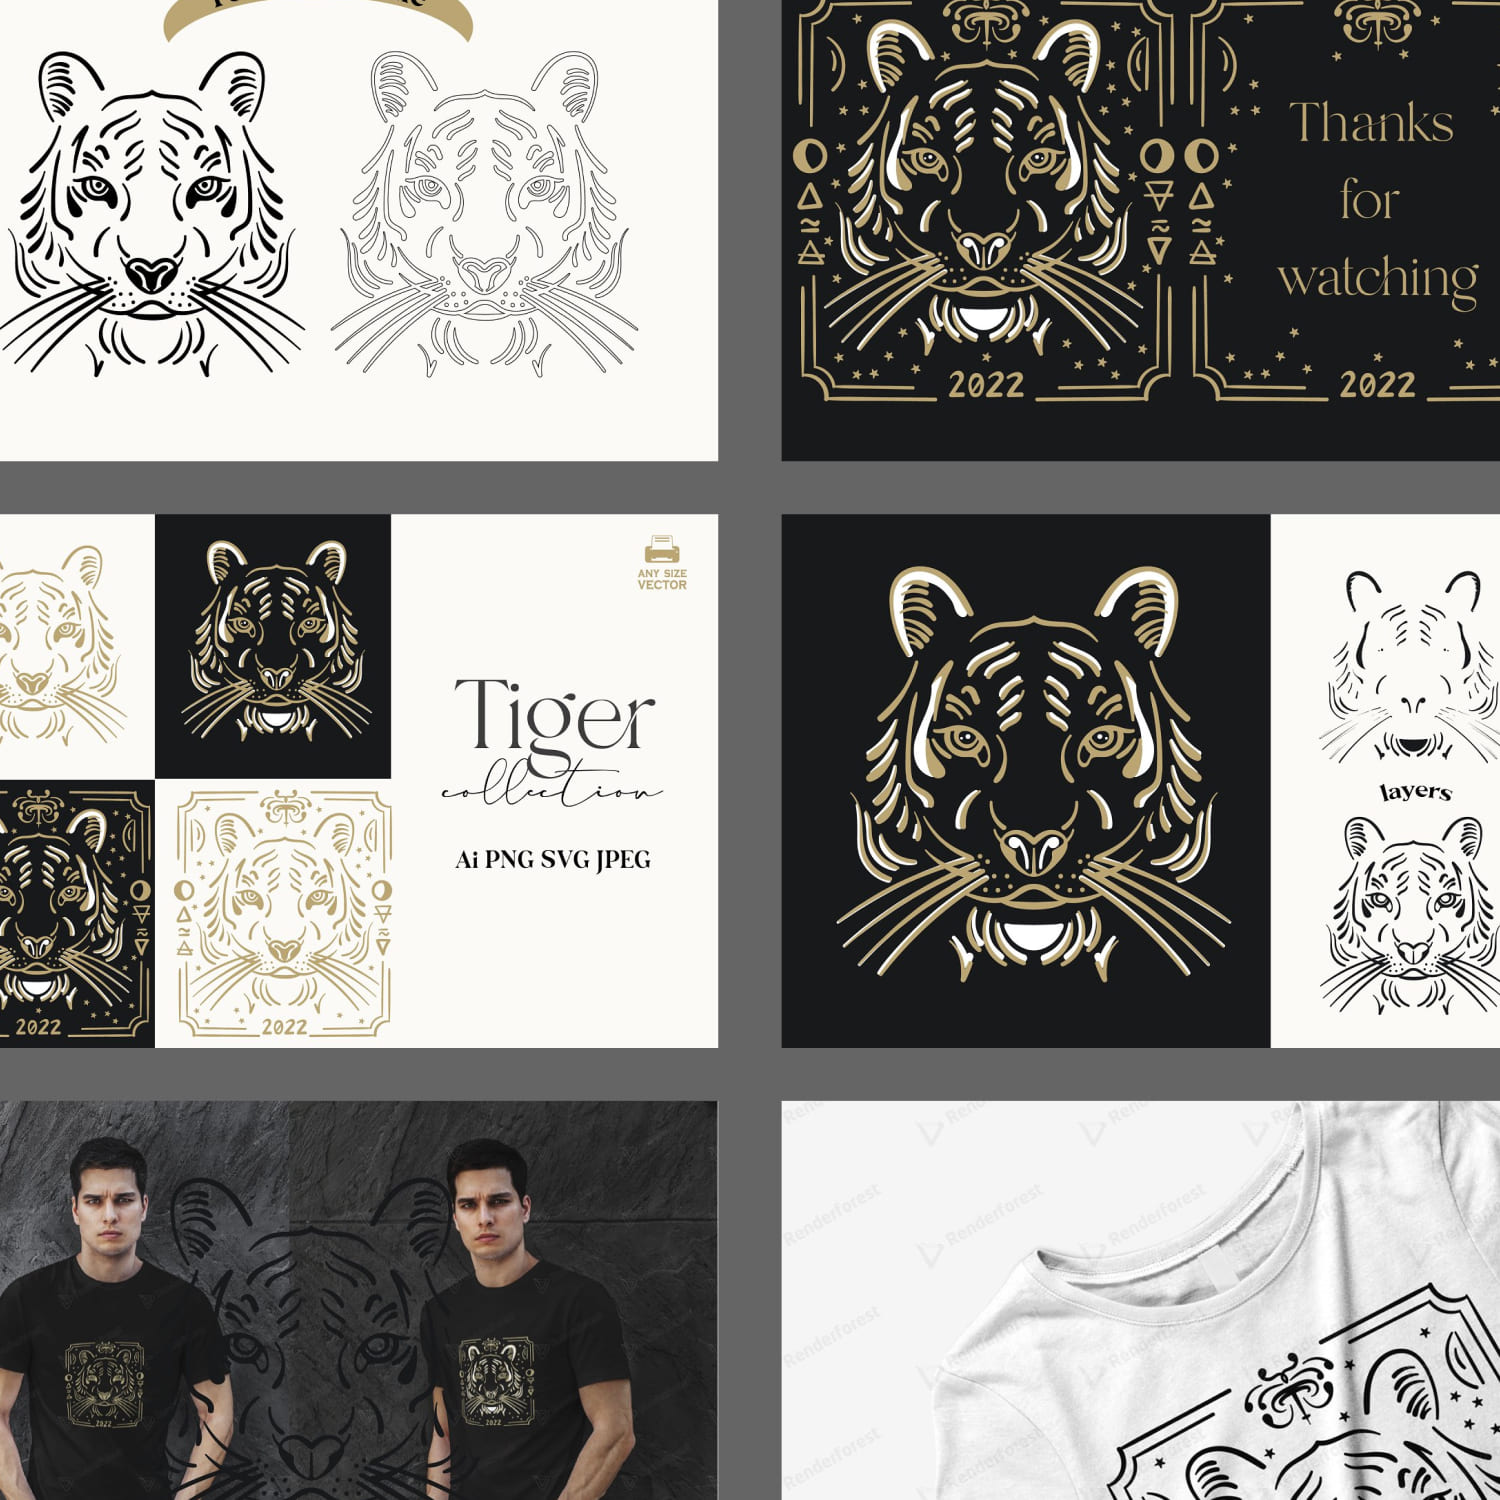 Tiger Illustrations cover.